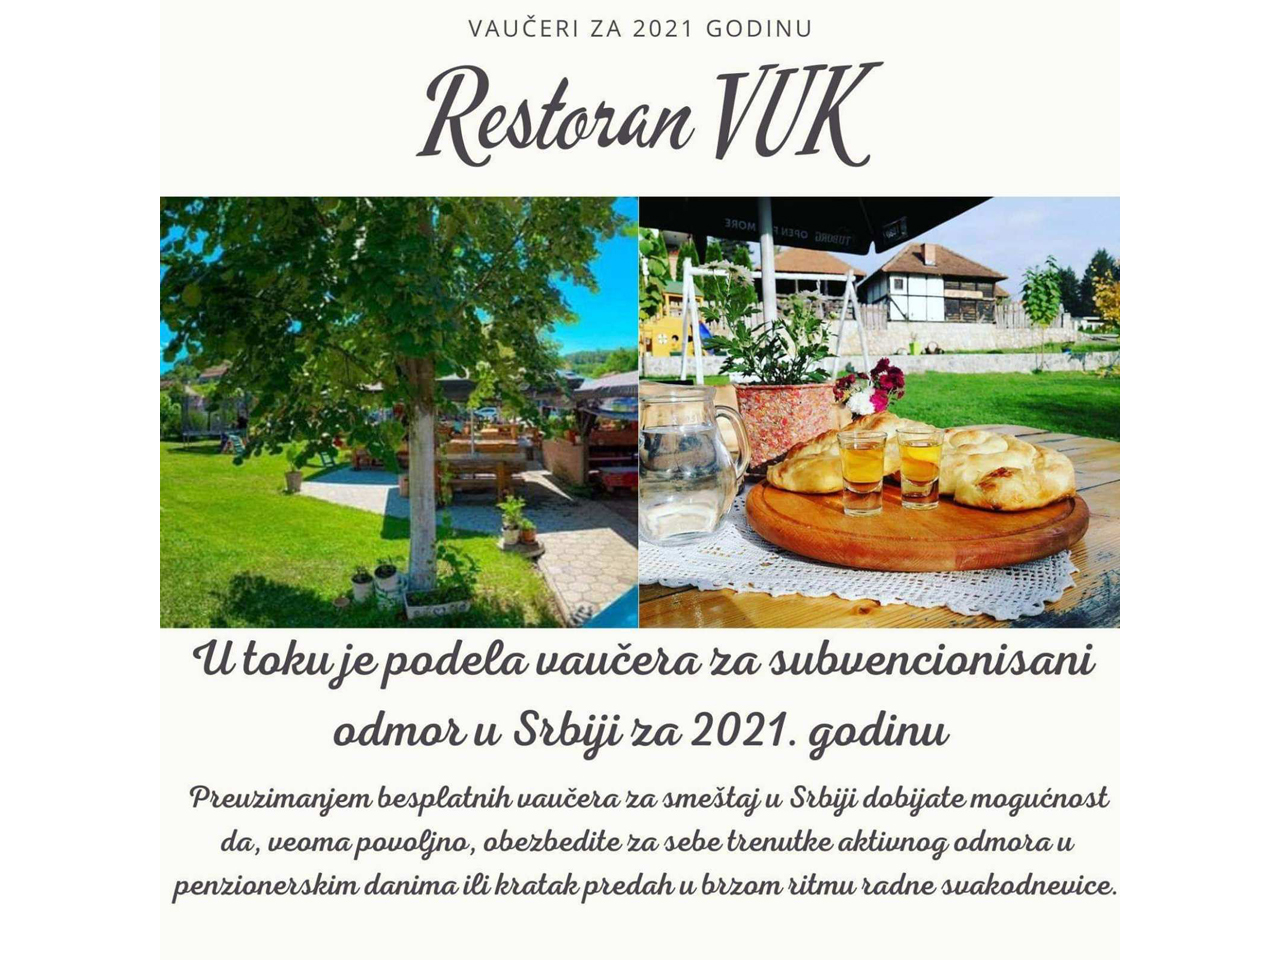 Photo 3 - RESTAURANT AND ACCOMMODATION VUK - Restaurants, Loznica